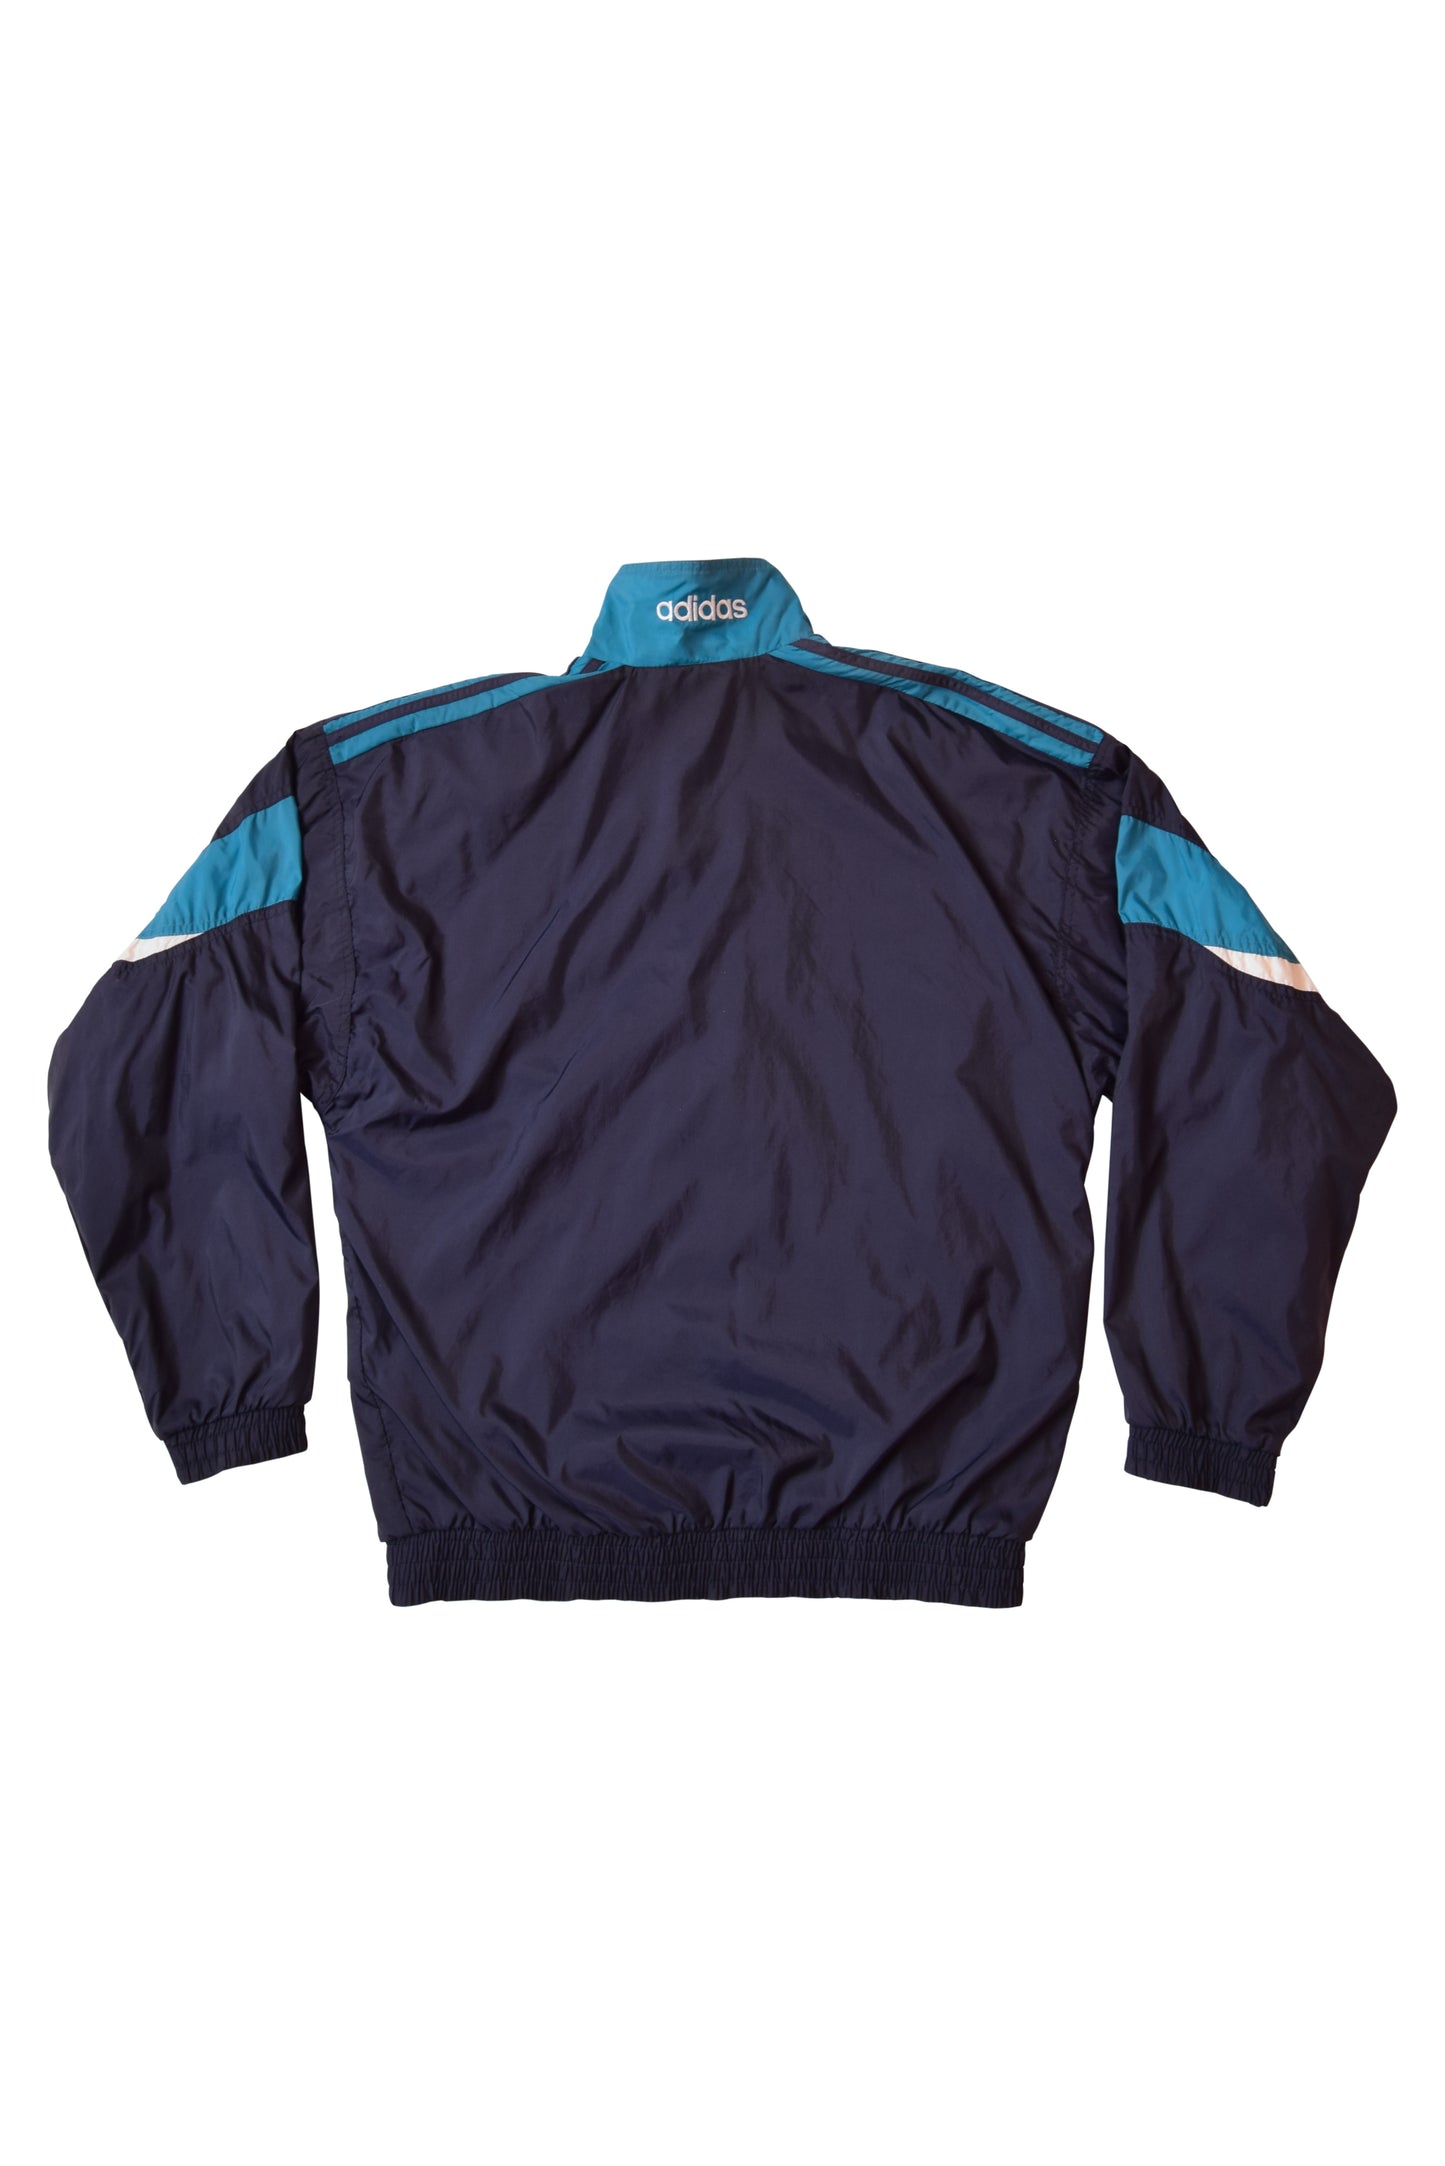 Vintage Adidas Jacket / Shell 90's  